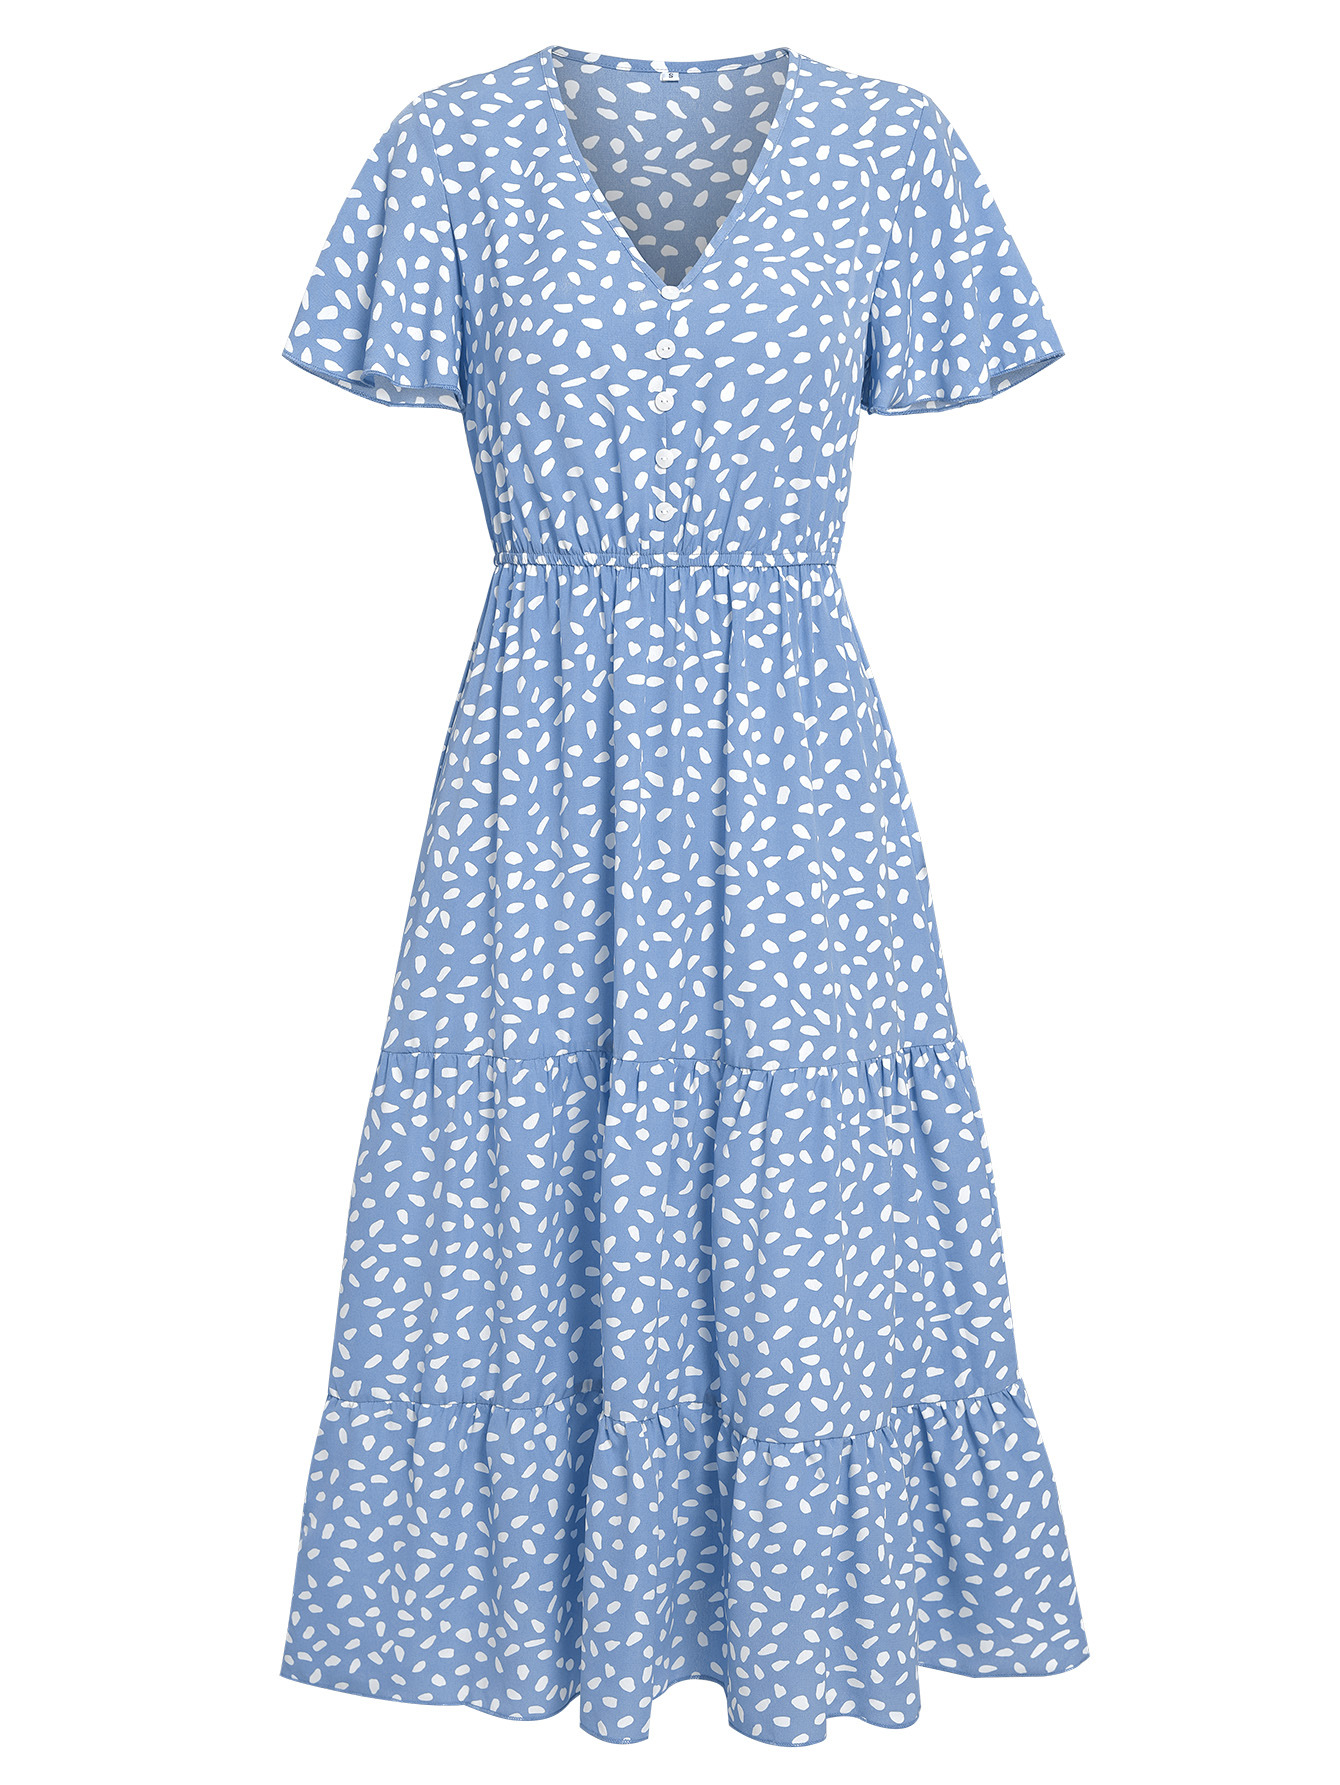 women's spring summer printed dress